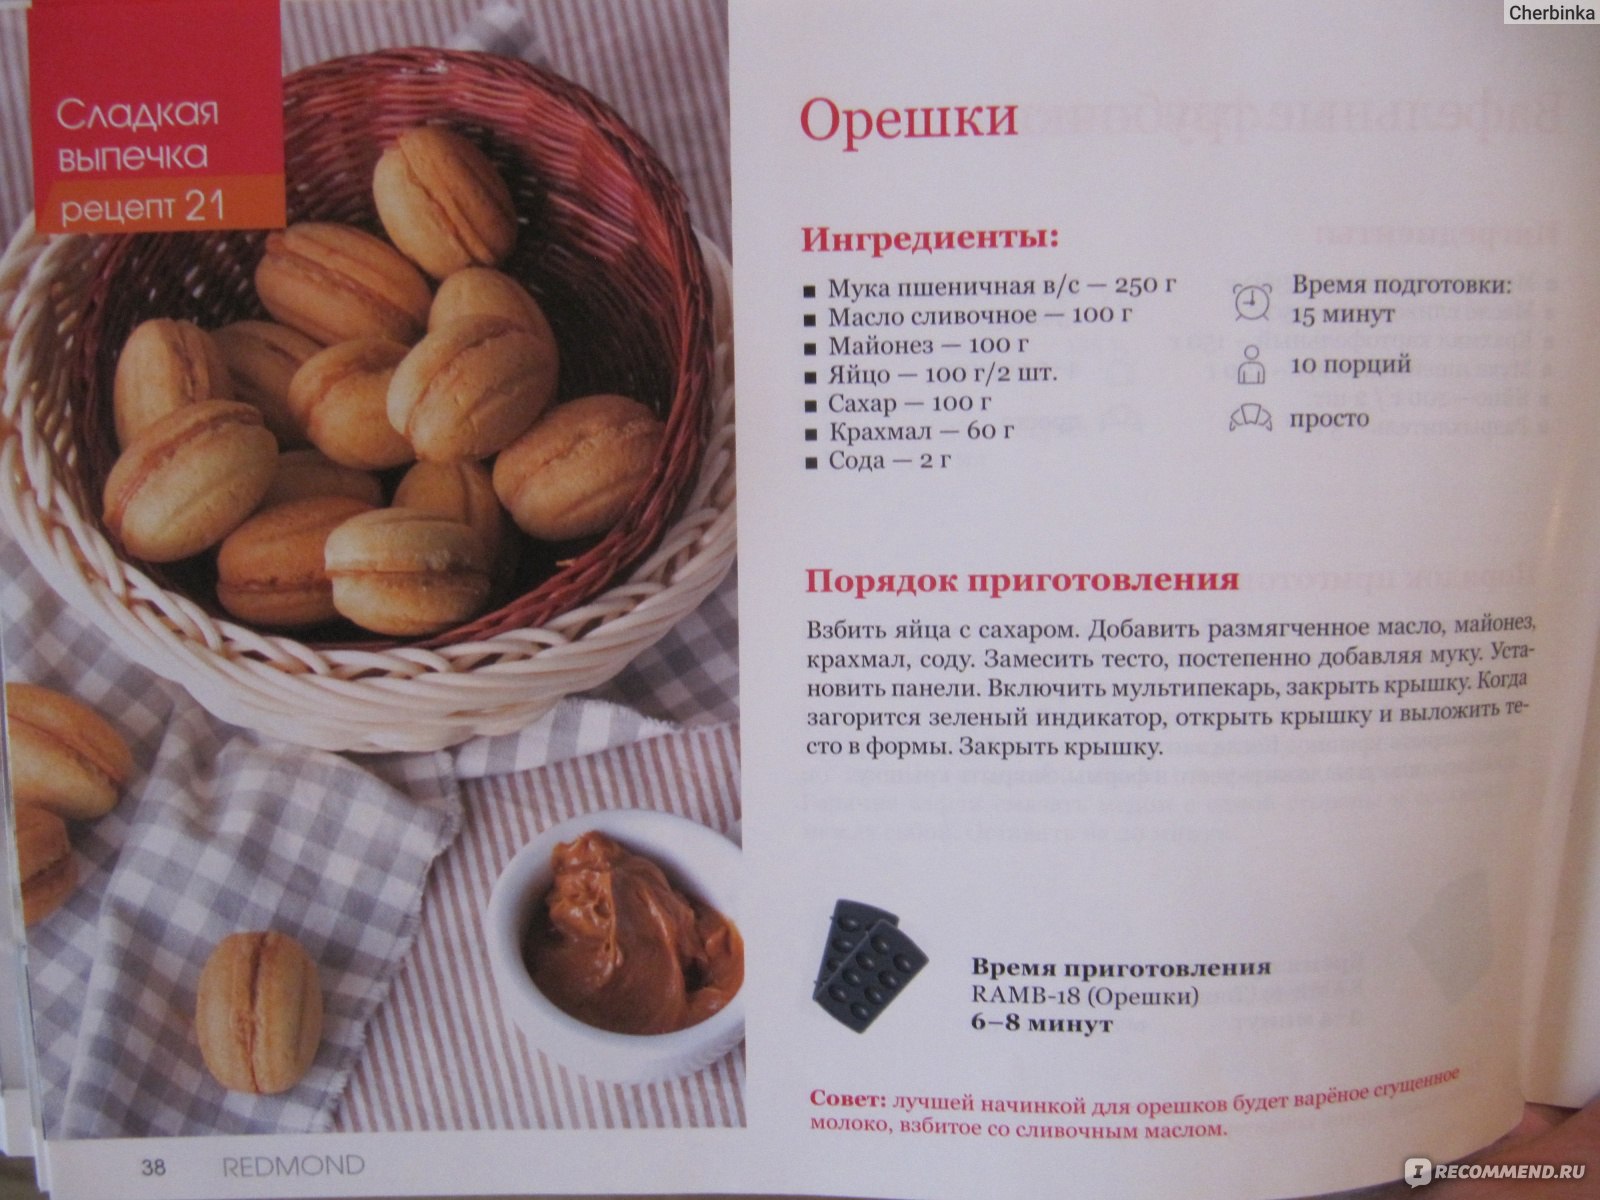 Рецепт орешки с сгущенкой рецепт с фото в орешнице на газу